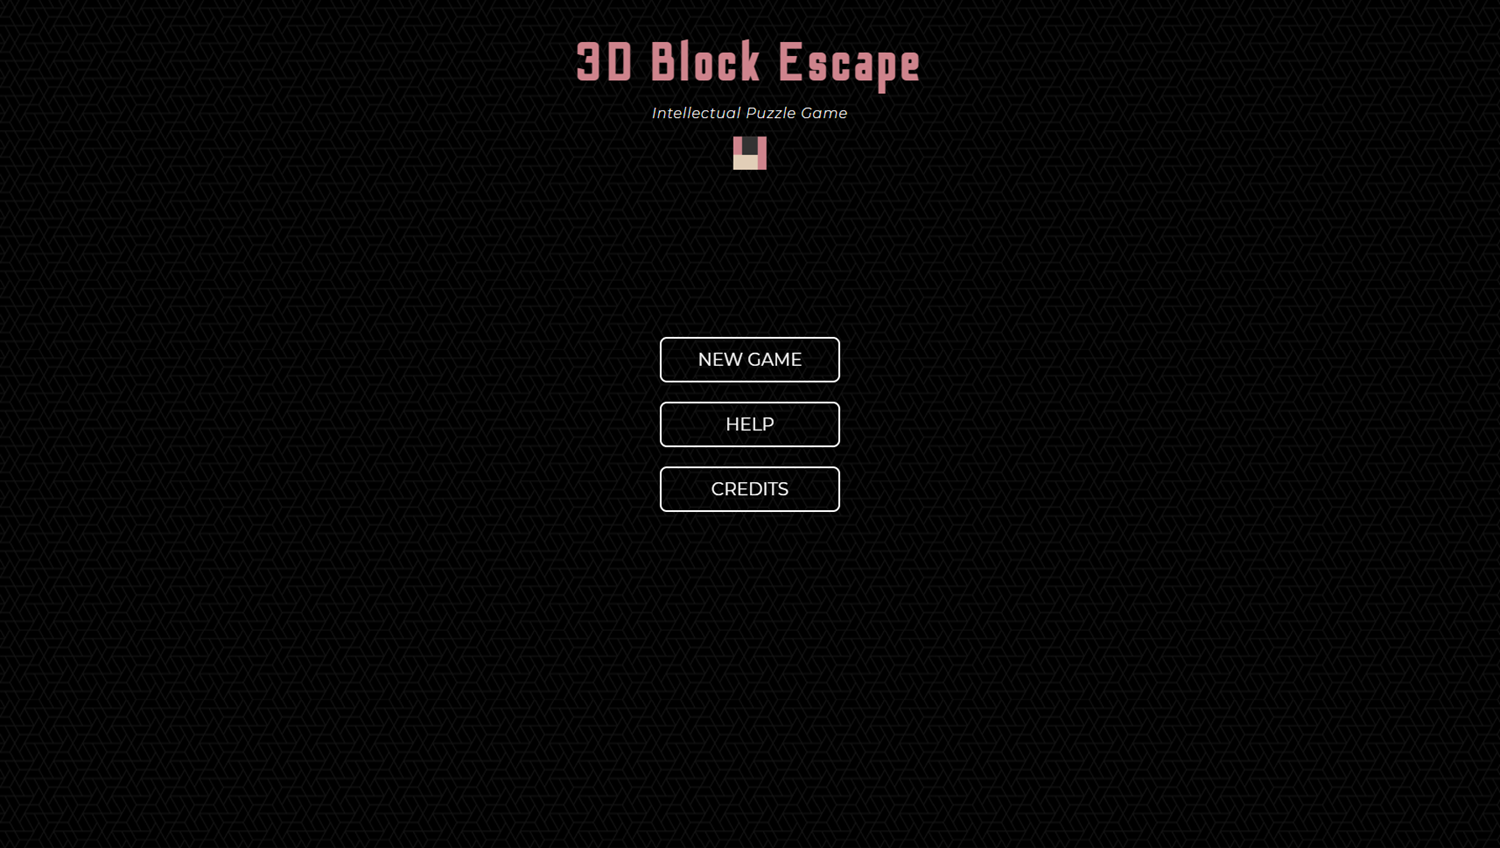 3D Block Escape Game Welcome Screen Screenshot.